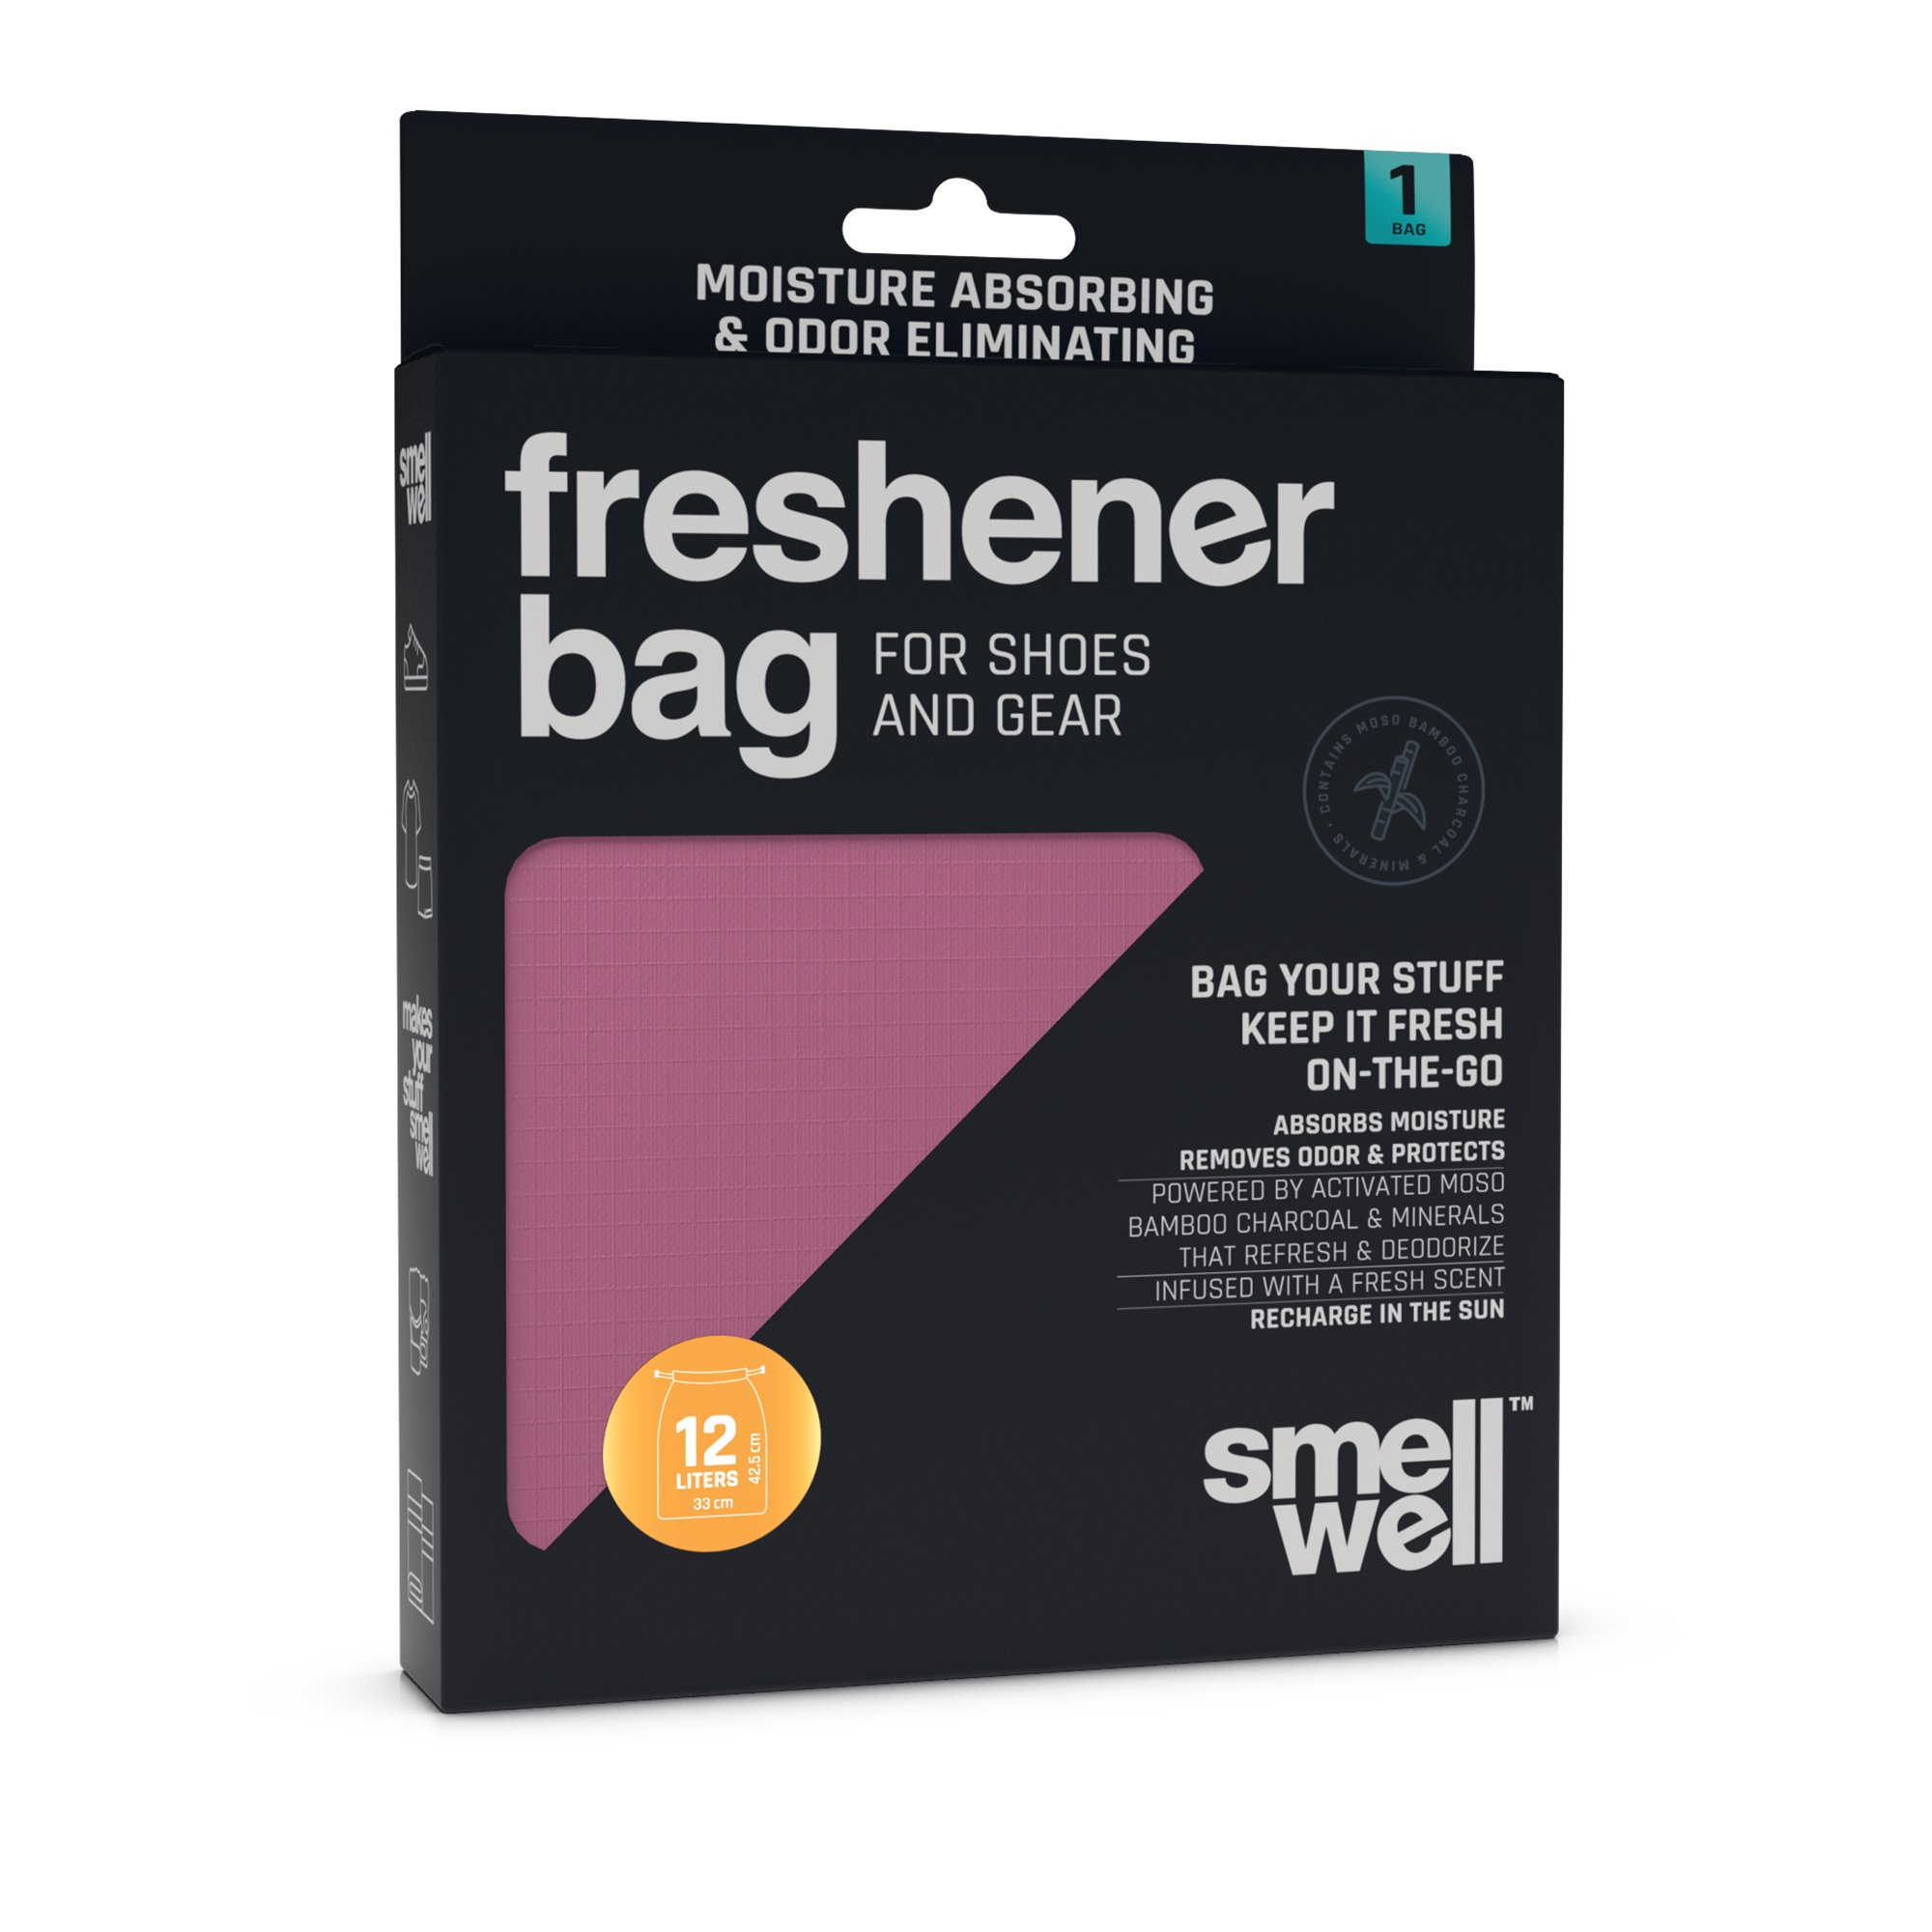 SmellWell Freshener Bags